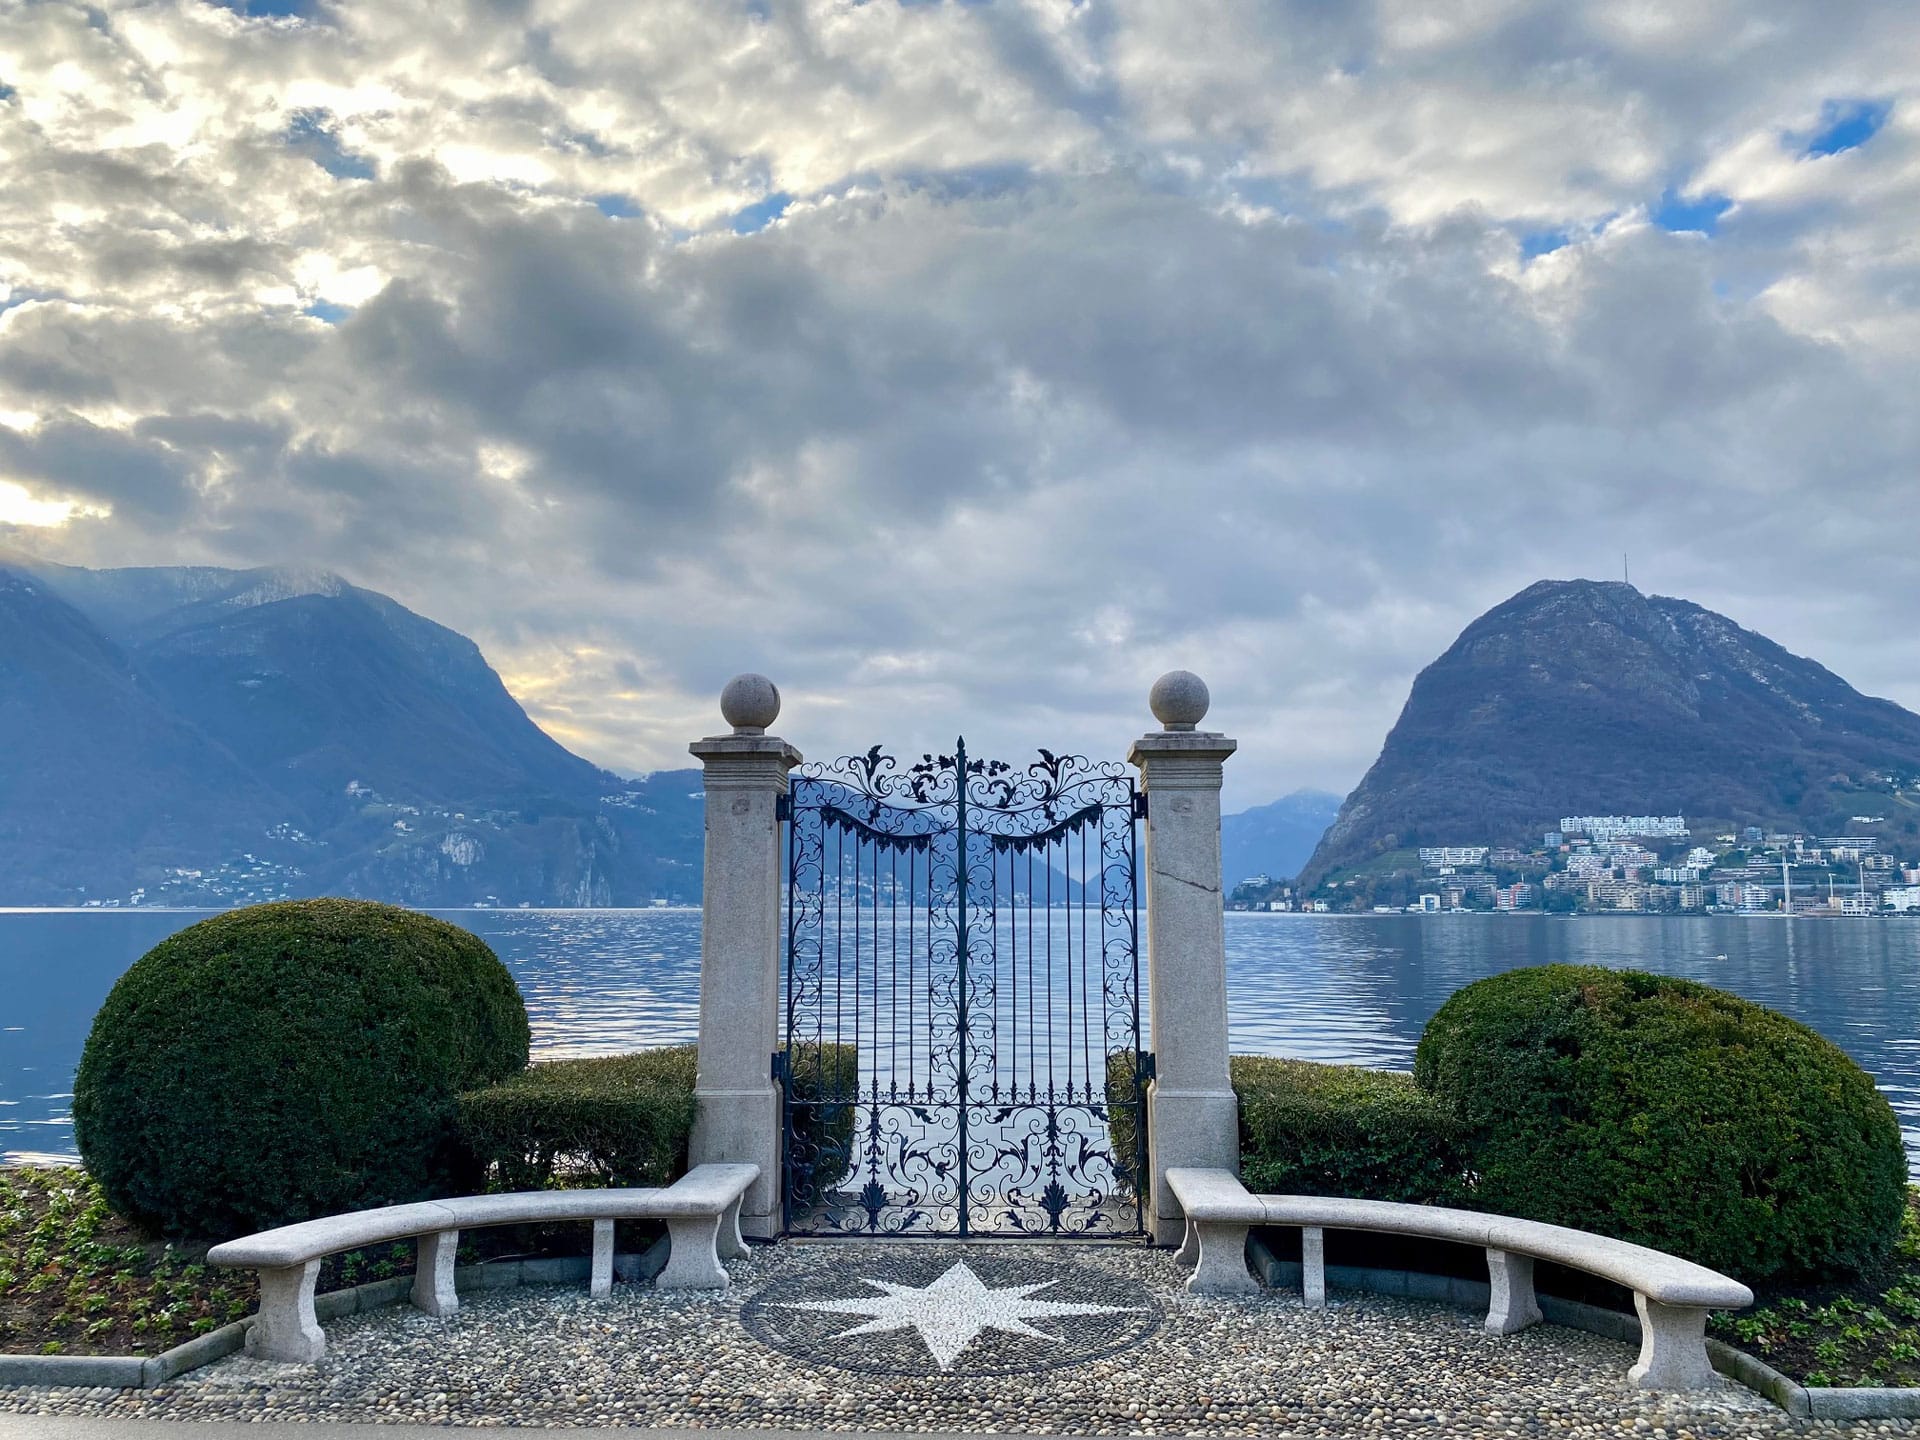 Southern Switzerland 3 Days Trip – Ascona, Locarno, Lugano & gems like Foroglio, Gerra, Morcote, Bosco Gurin & much more (Bern)